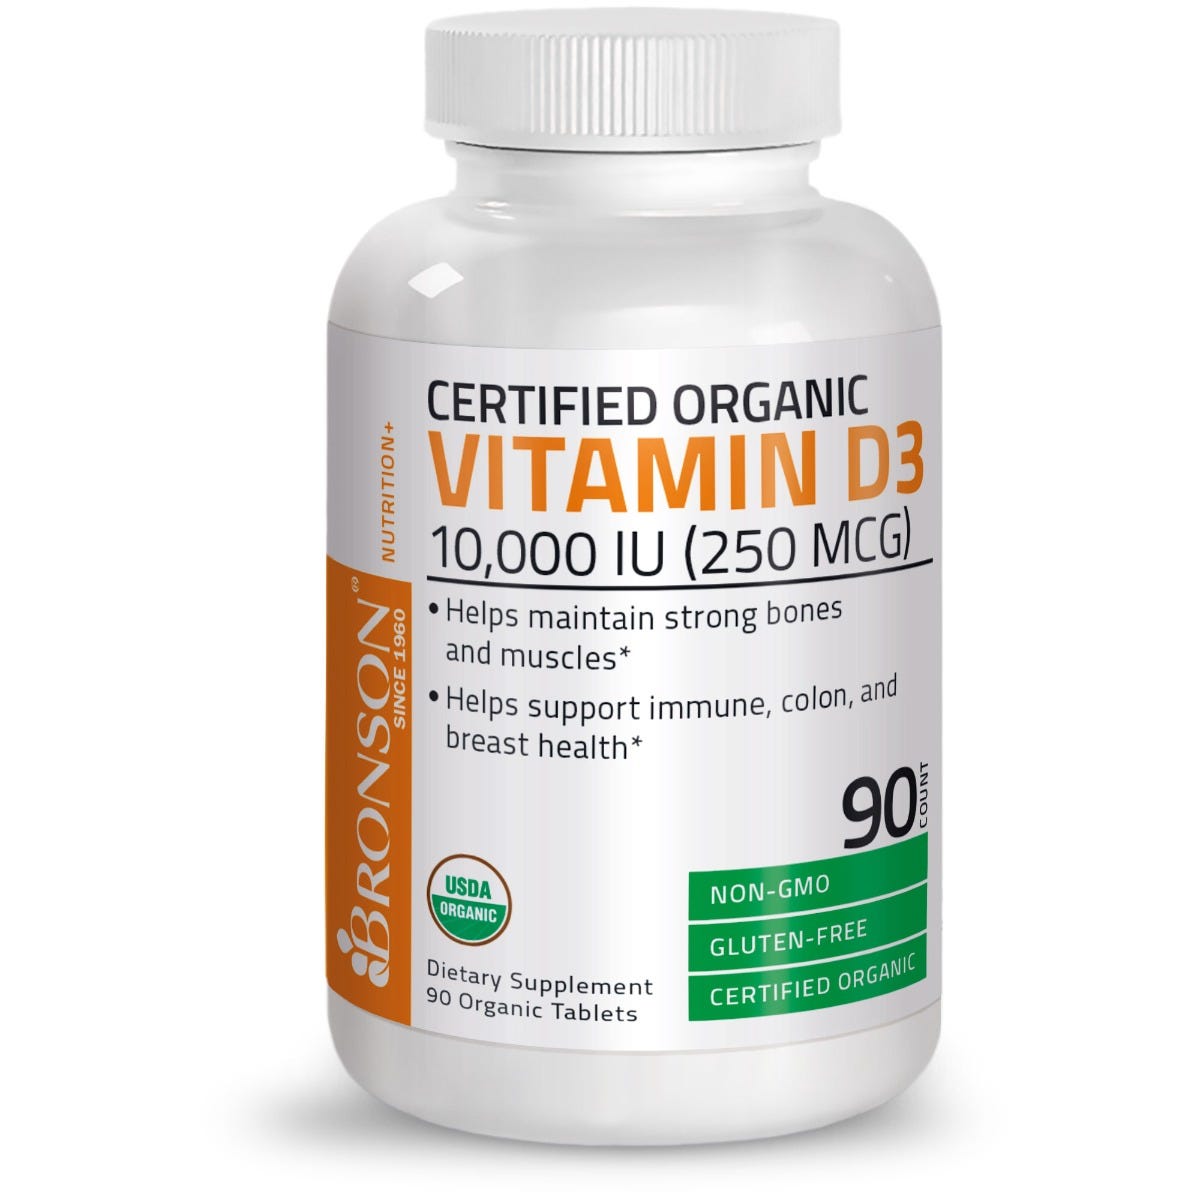 Vitamin D3 High Dose USDA Certified Organic - 10,000 IU view 1 of 6